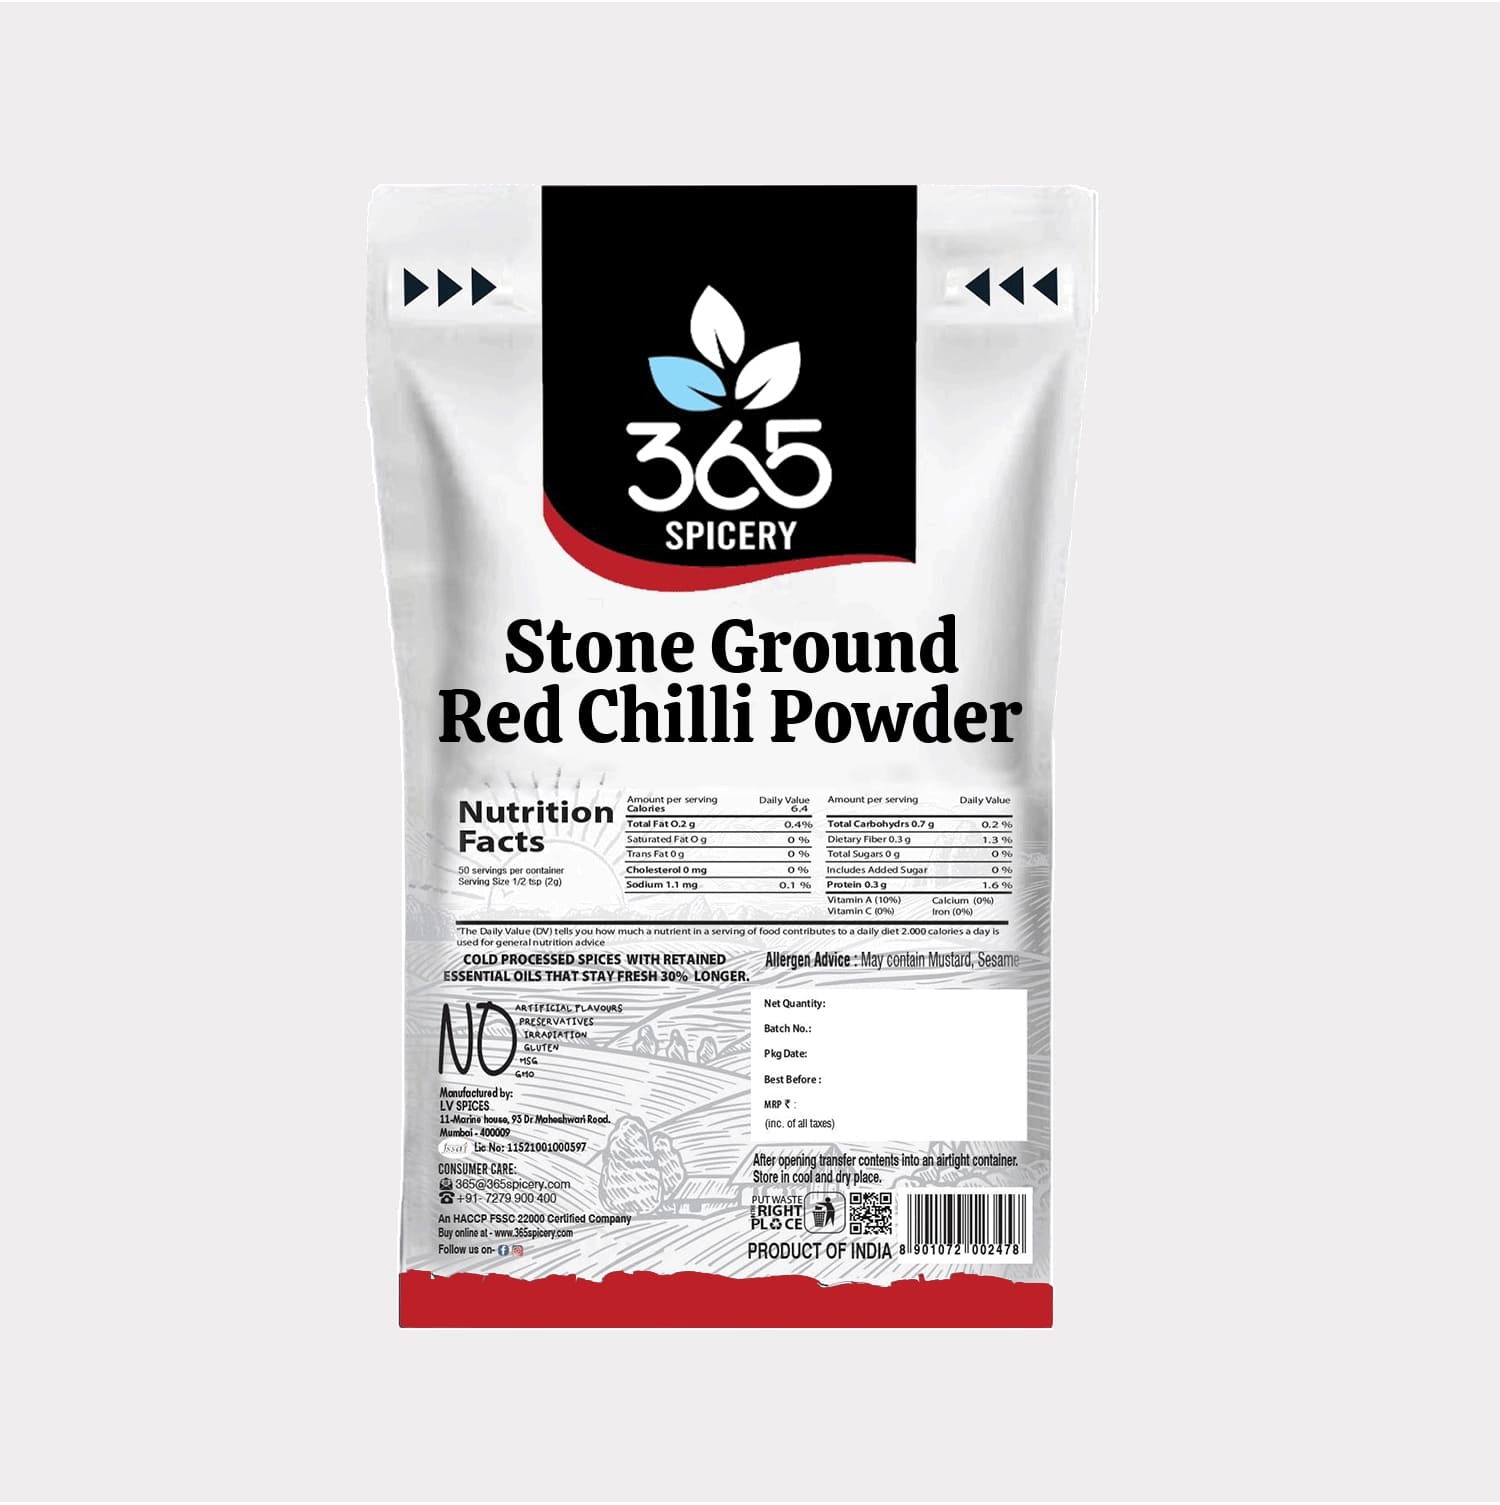 Stone Ground Red Chilli Powder